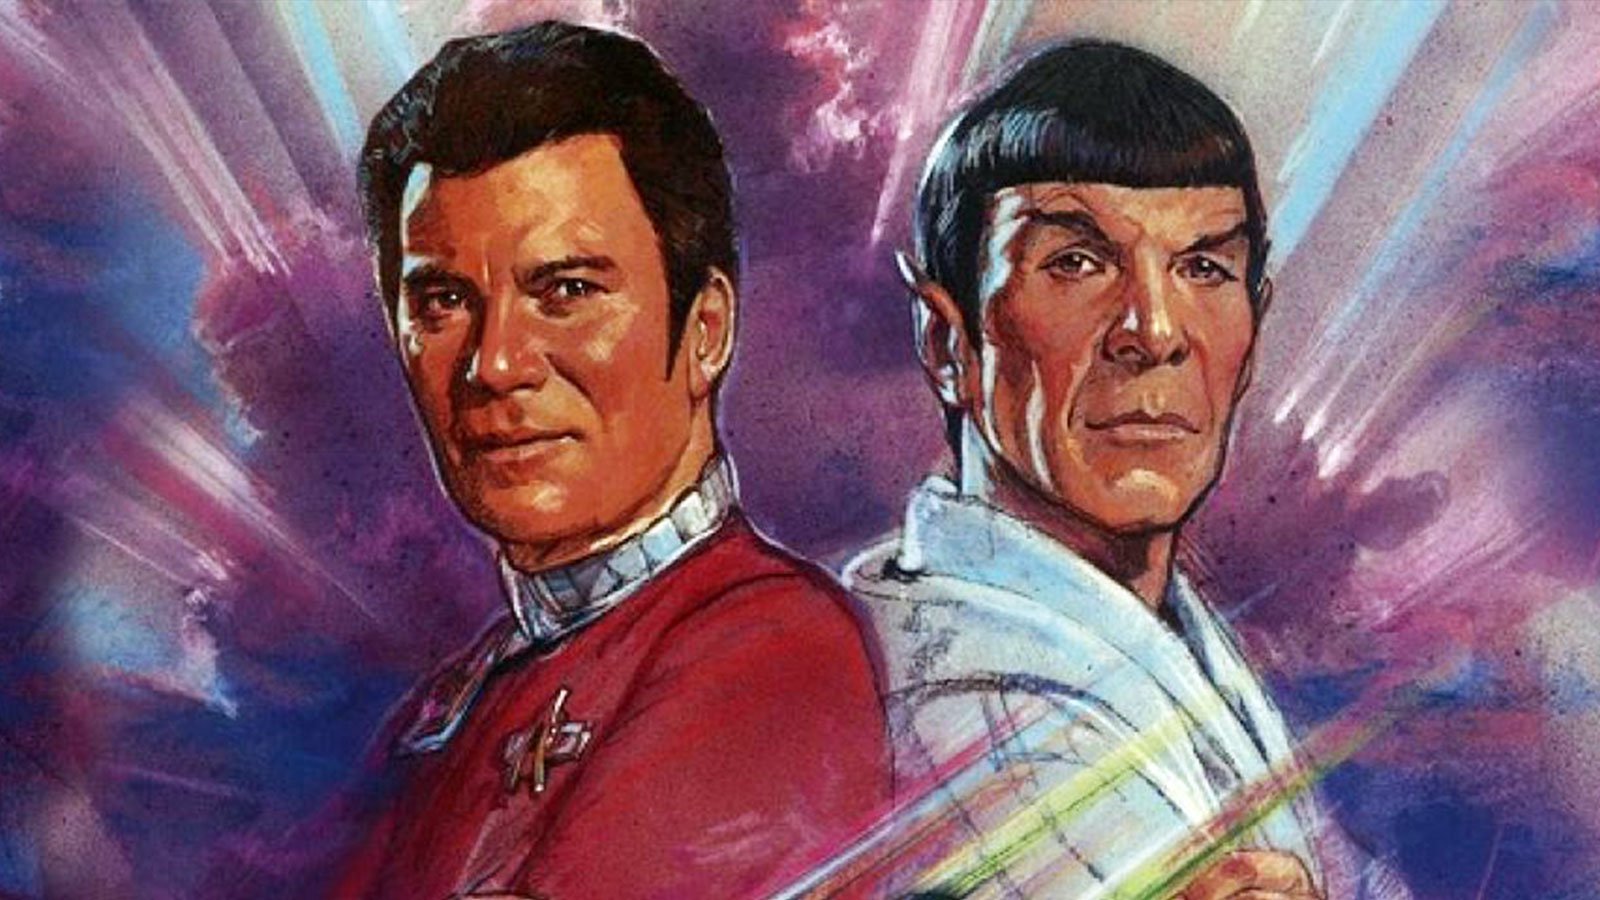 Star Trek IV: The Voyage Home Celebrates Its 30th Anniversary